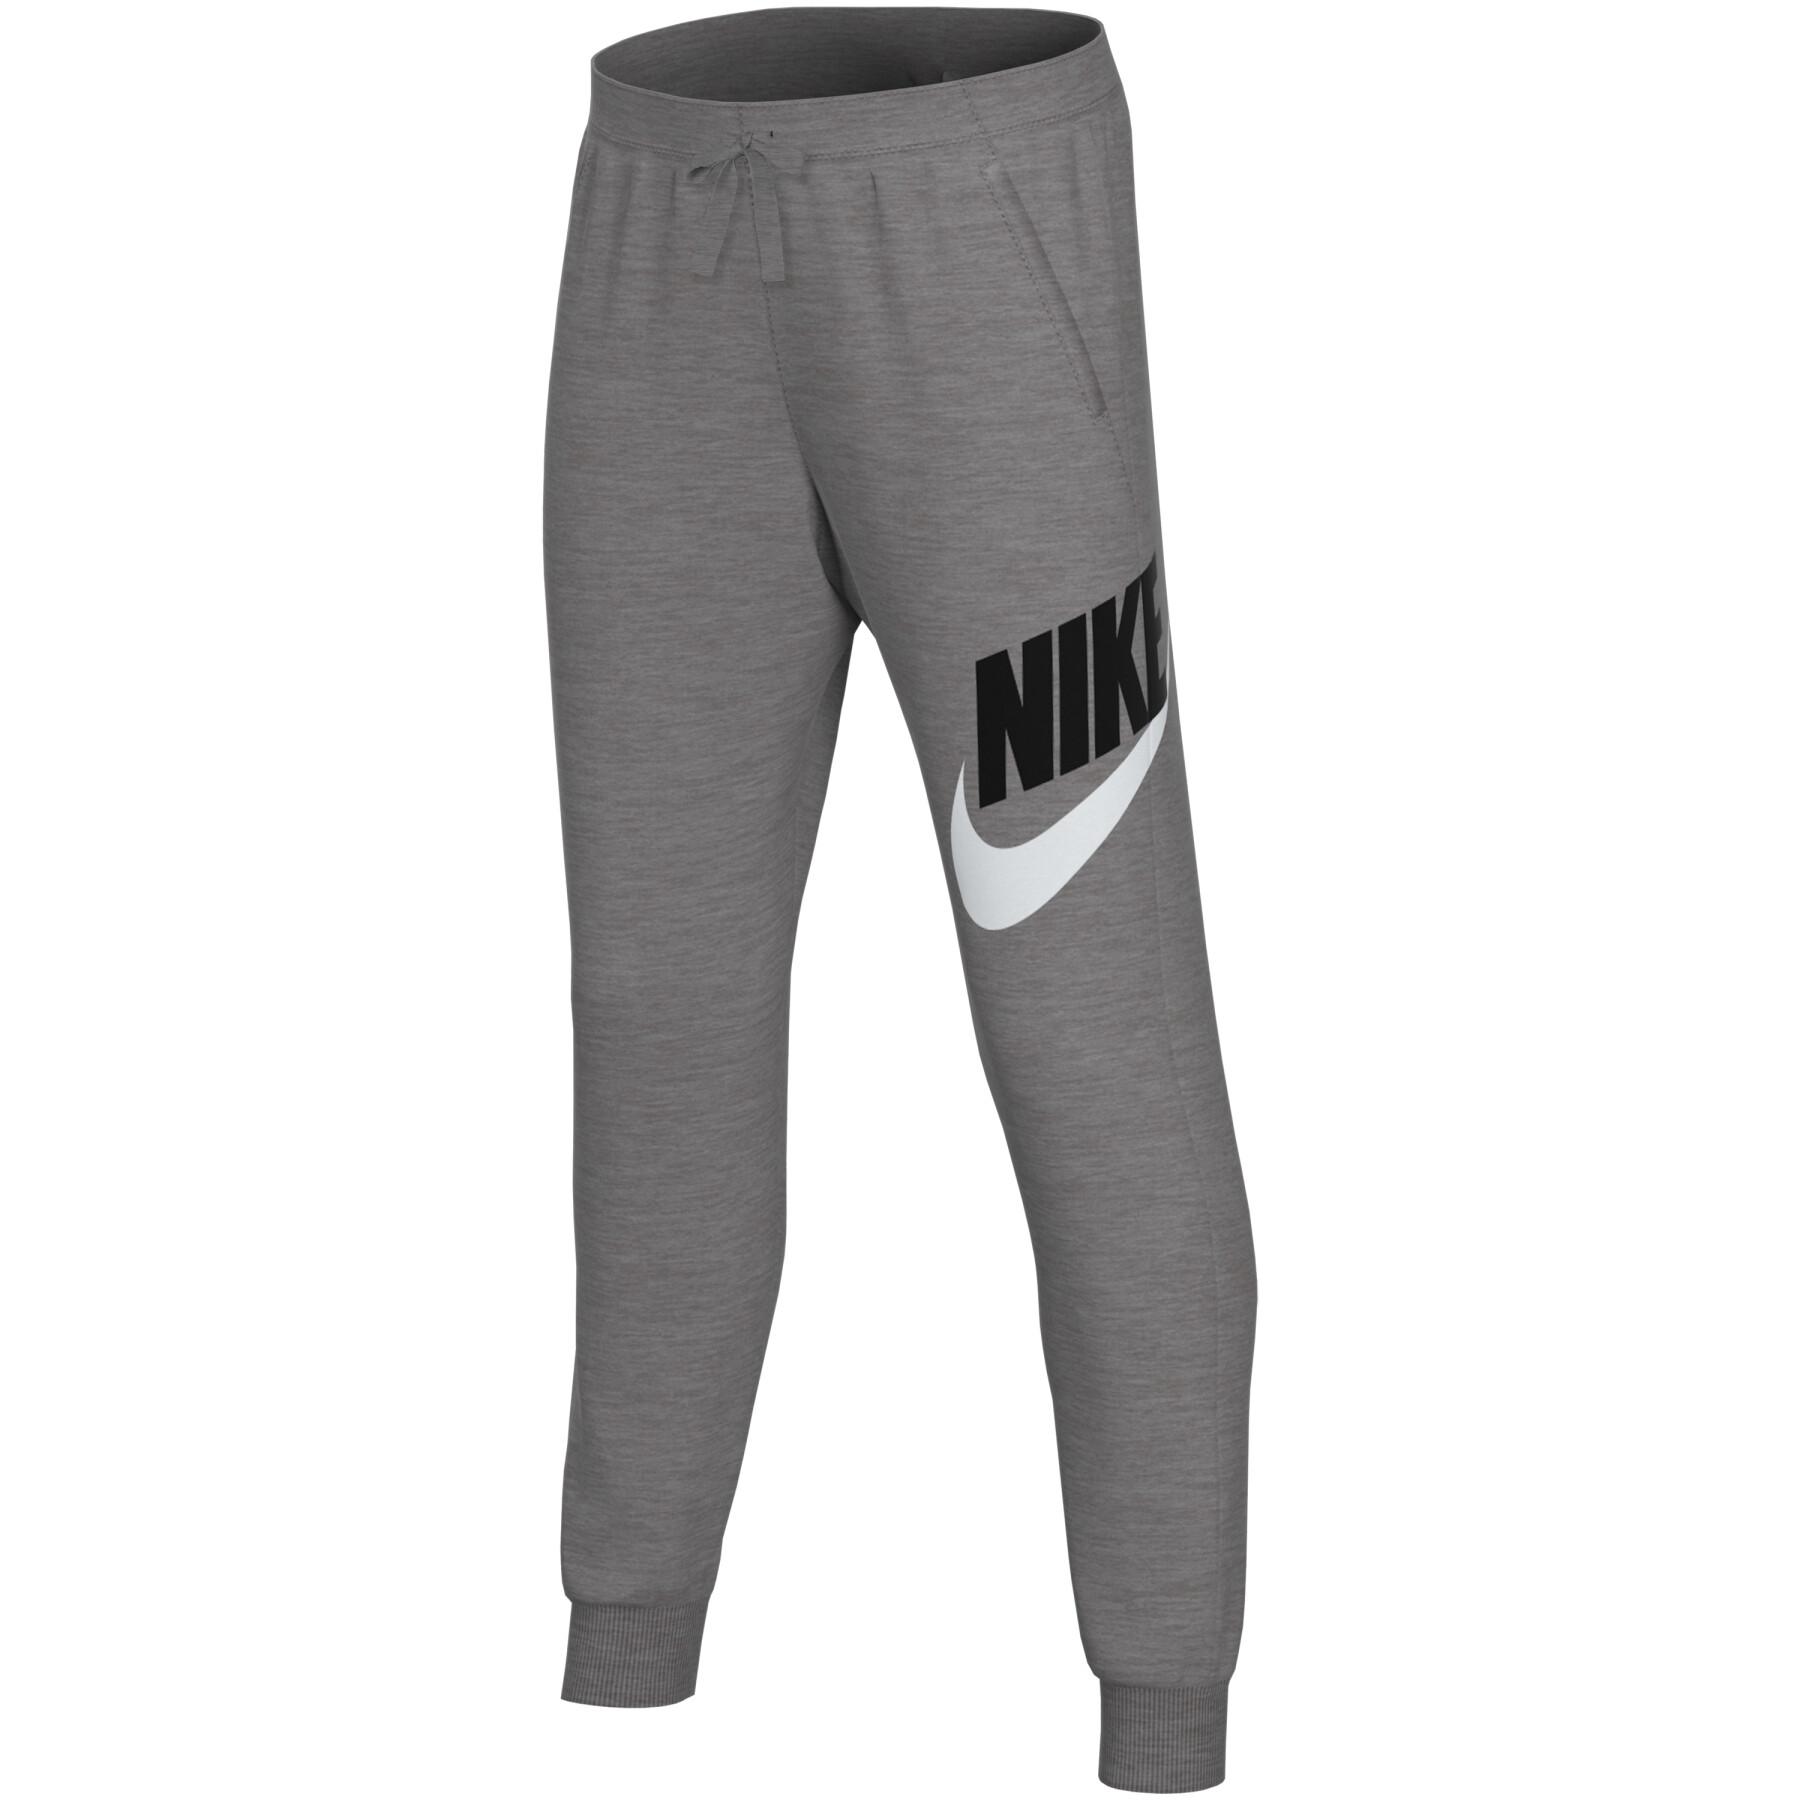 Jogginganzug für Sportswear Fleece - Club Kinder - Kinderbekleidung - Jogginghosen Nike Lifestyle